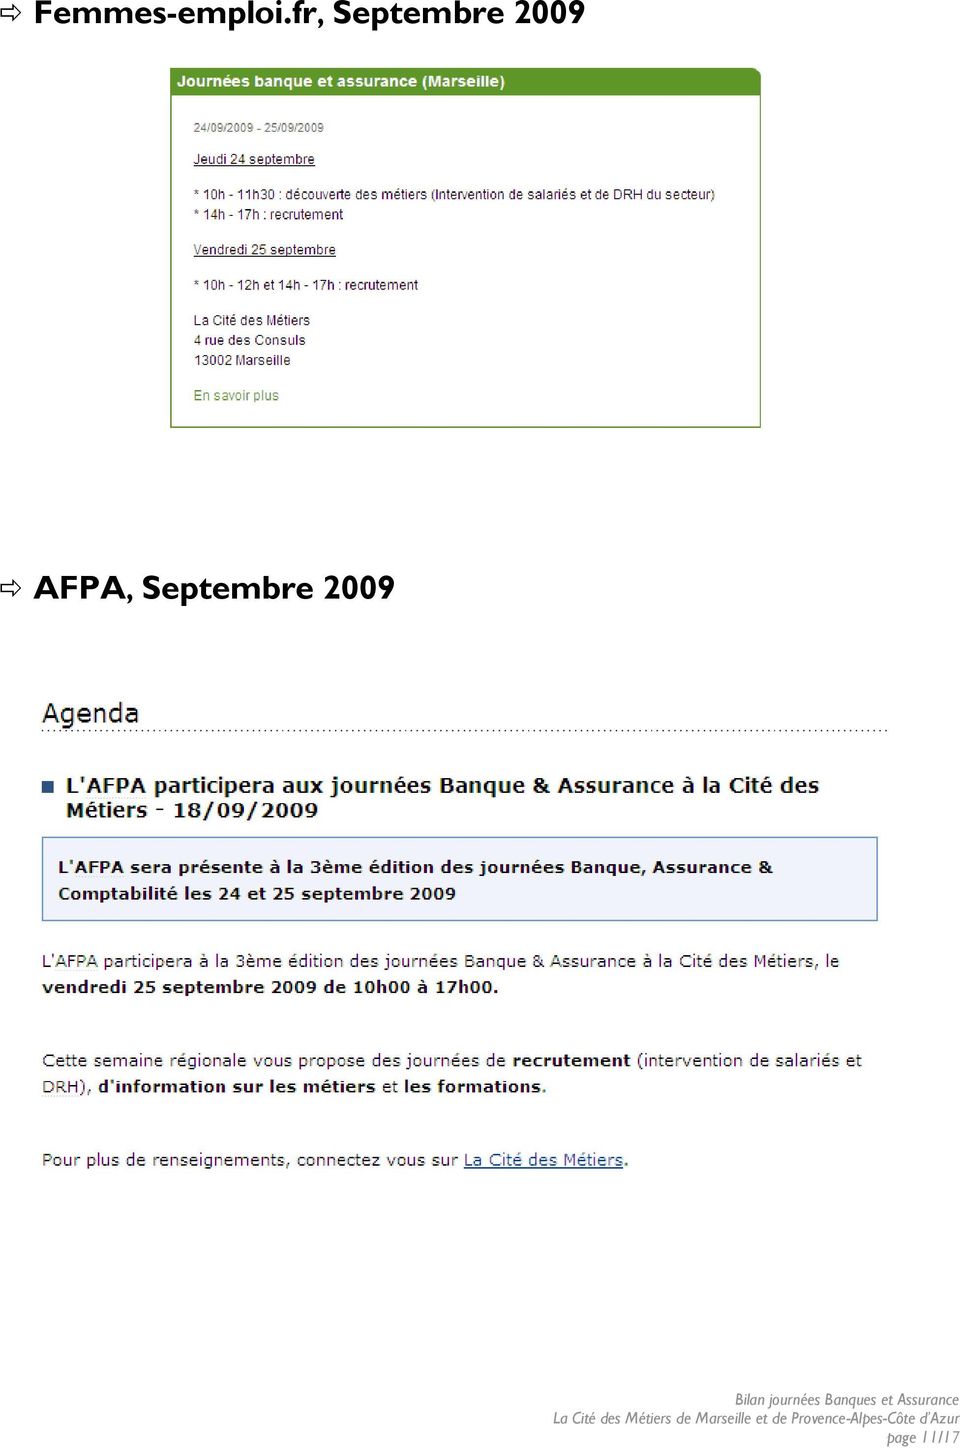 2009 AFPA,